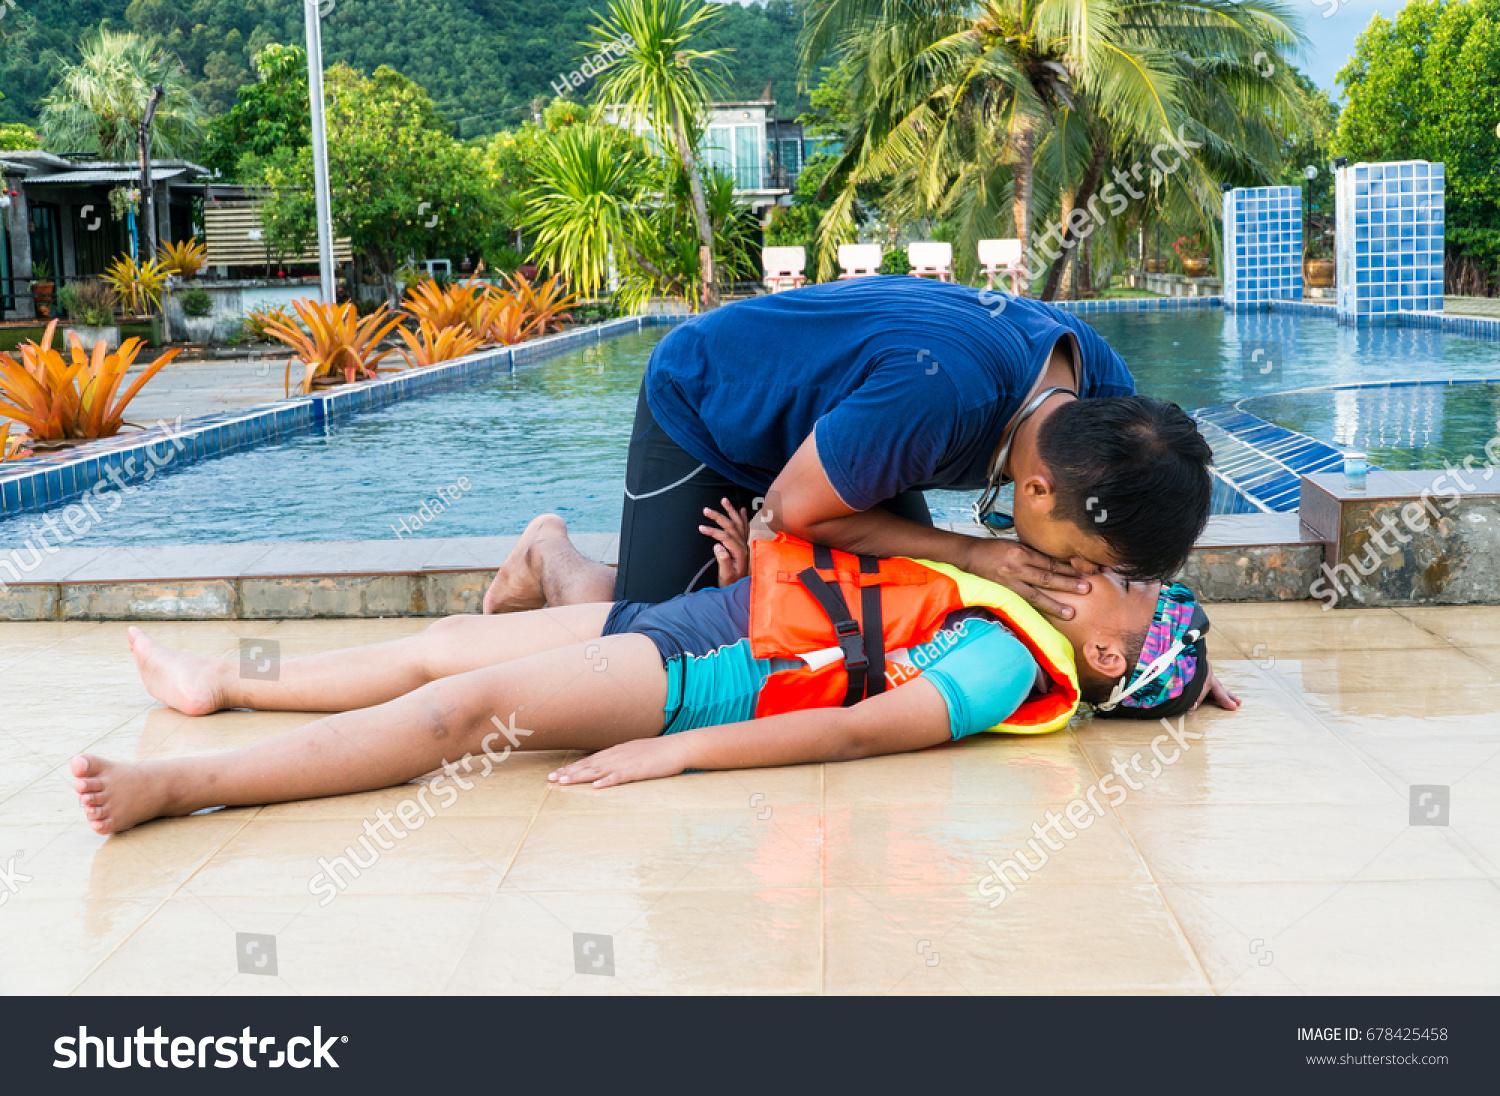 Man Helping Drowning Child Swimming Pool Stock Photo (Edit Now) 678425458